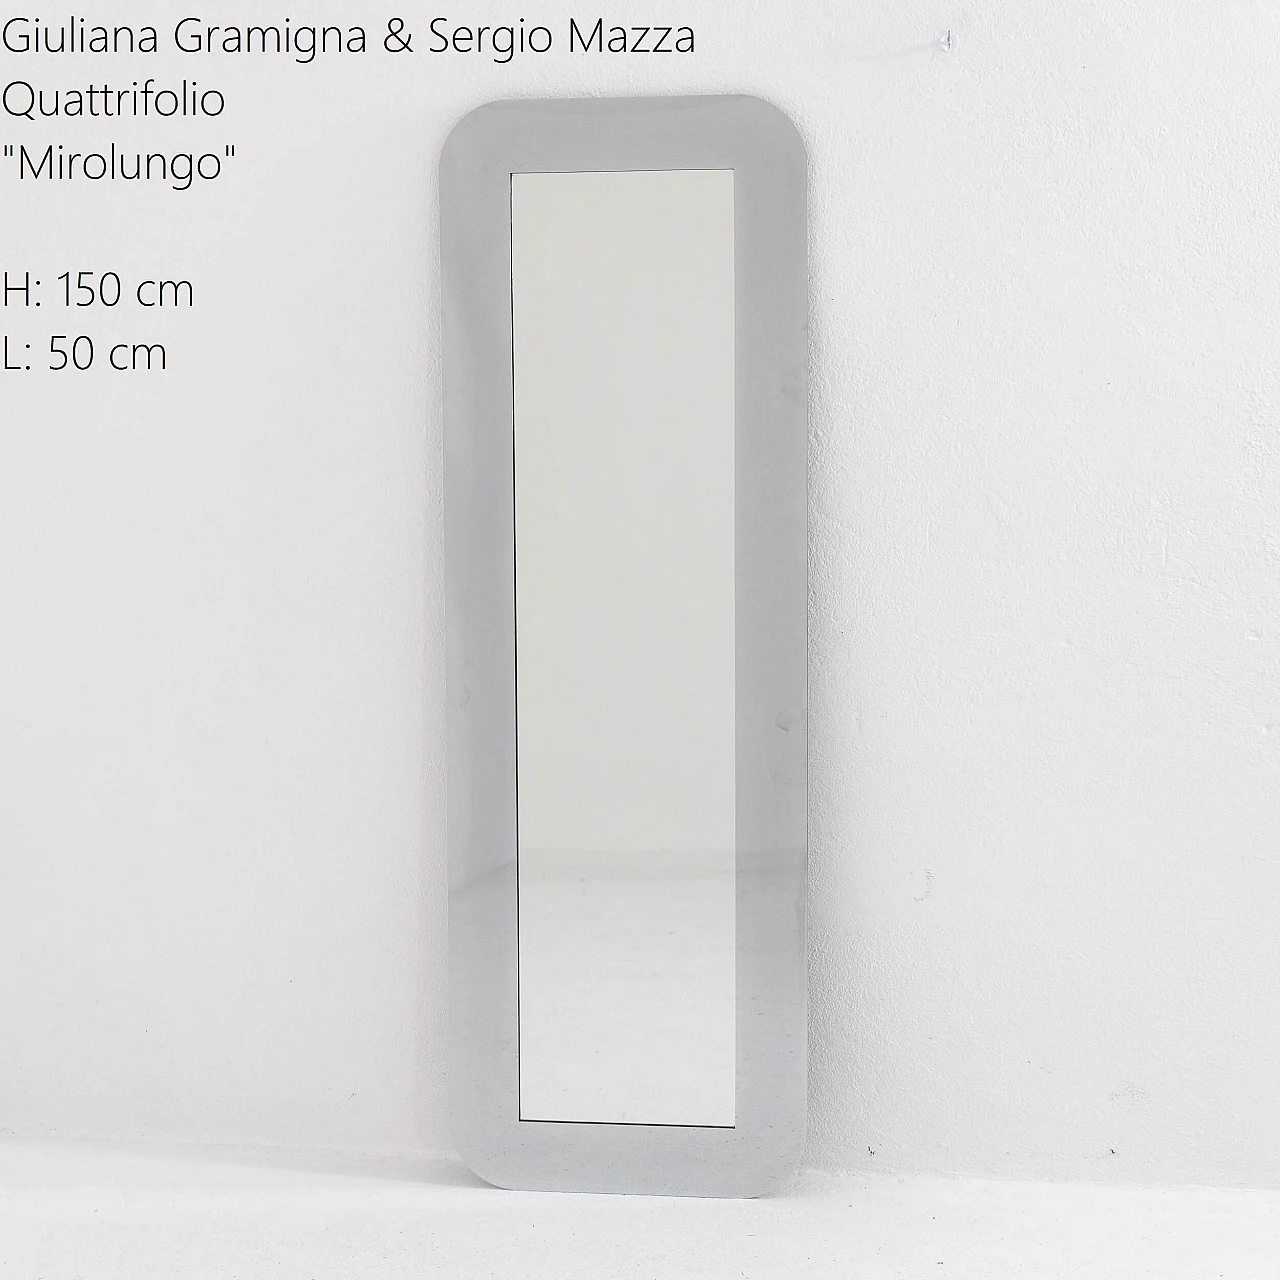 Mirolungo mirror by Gramegna and Mazza for Quattrifolio, 1970s 1